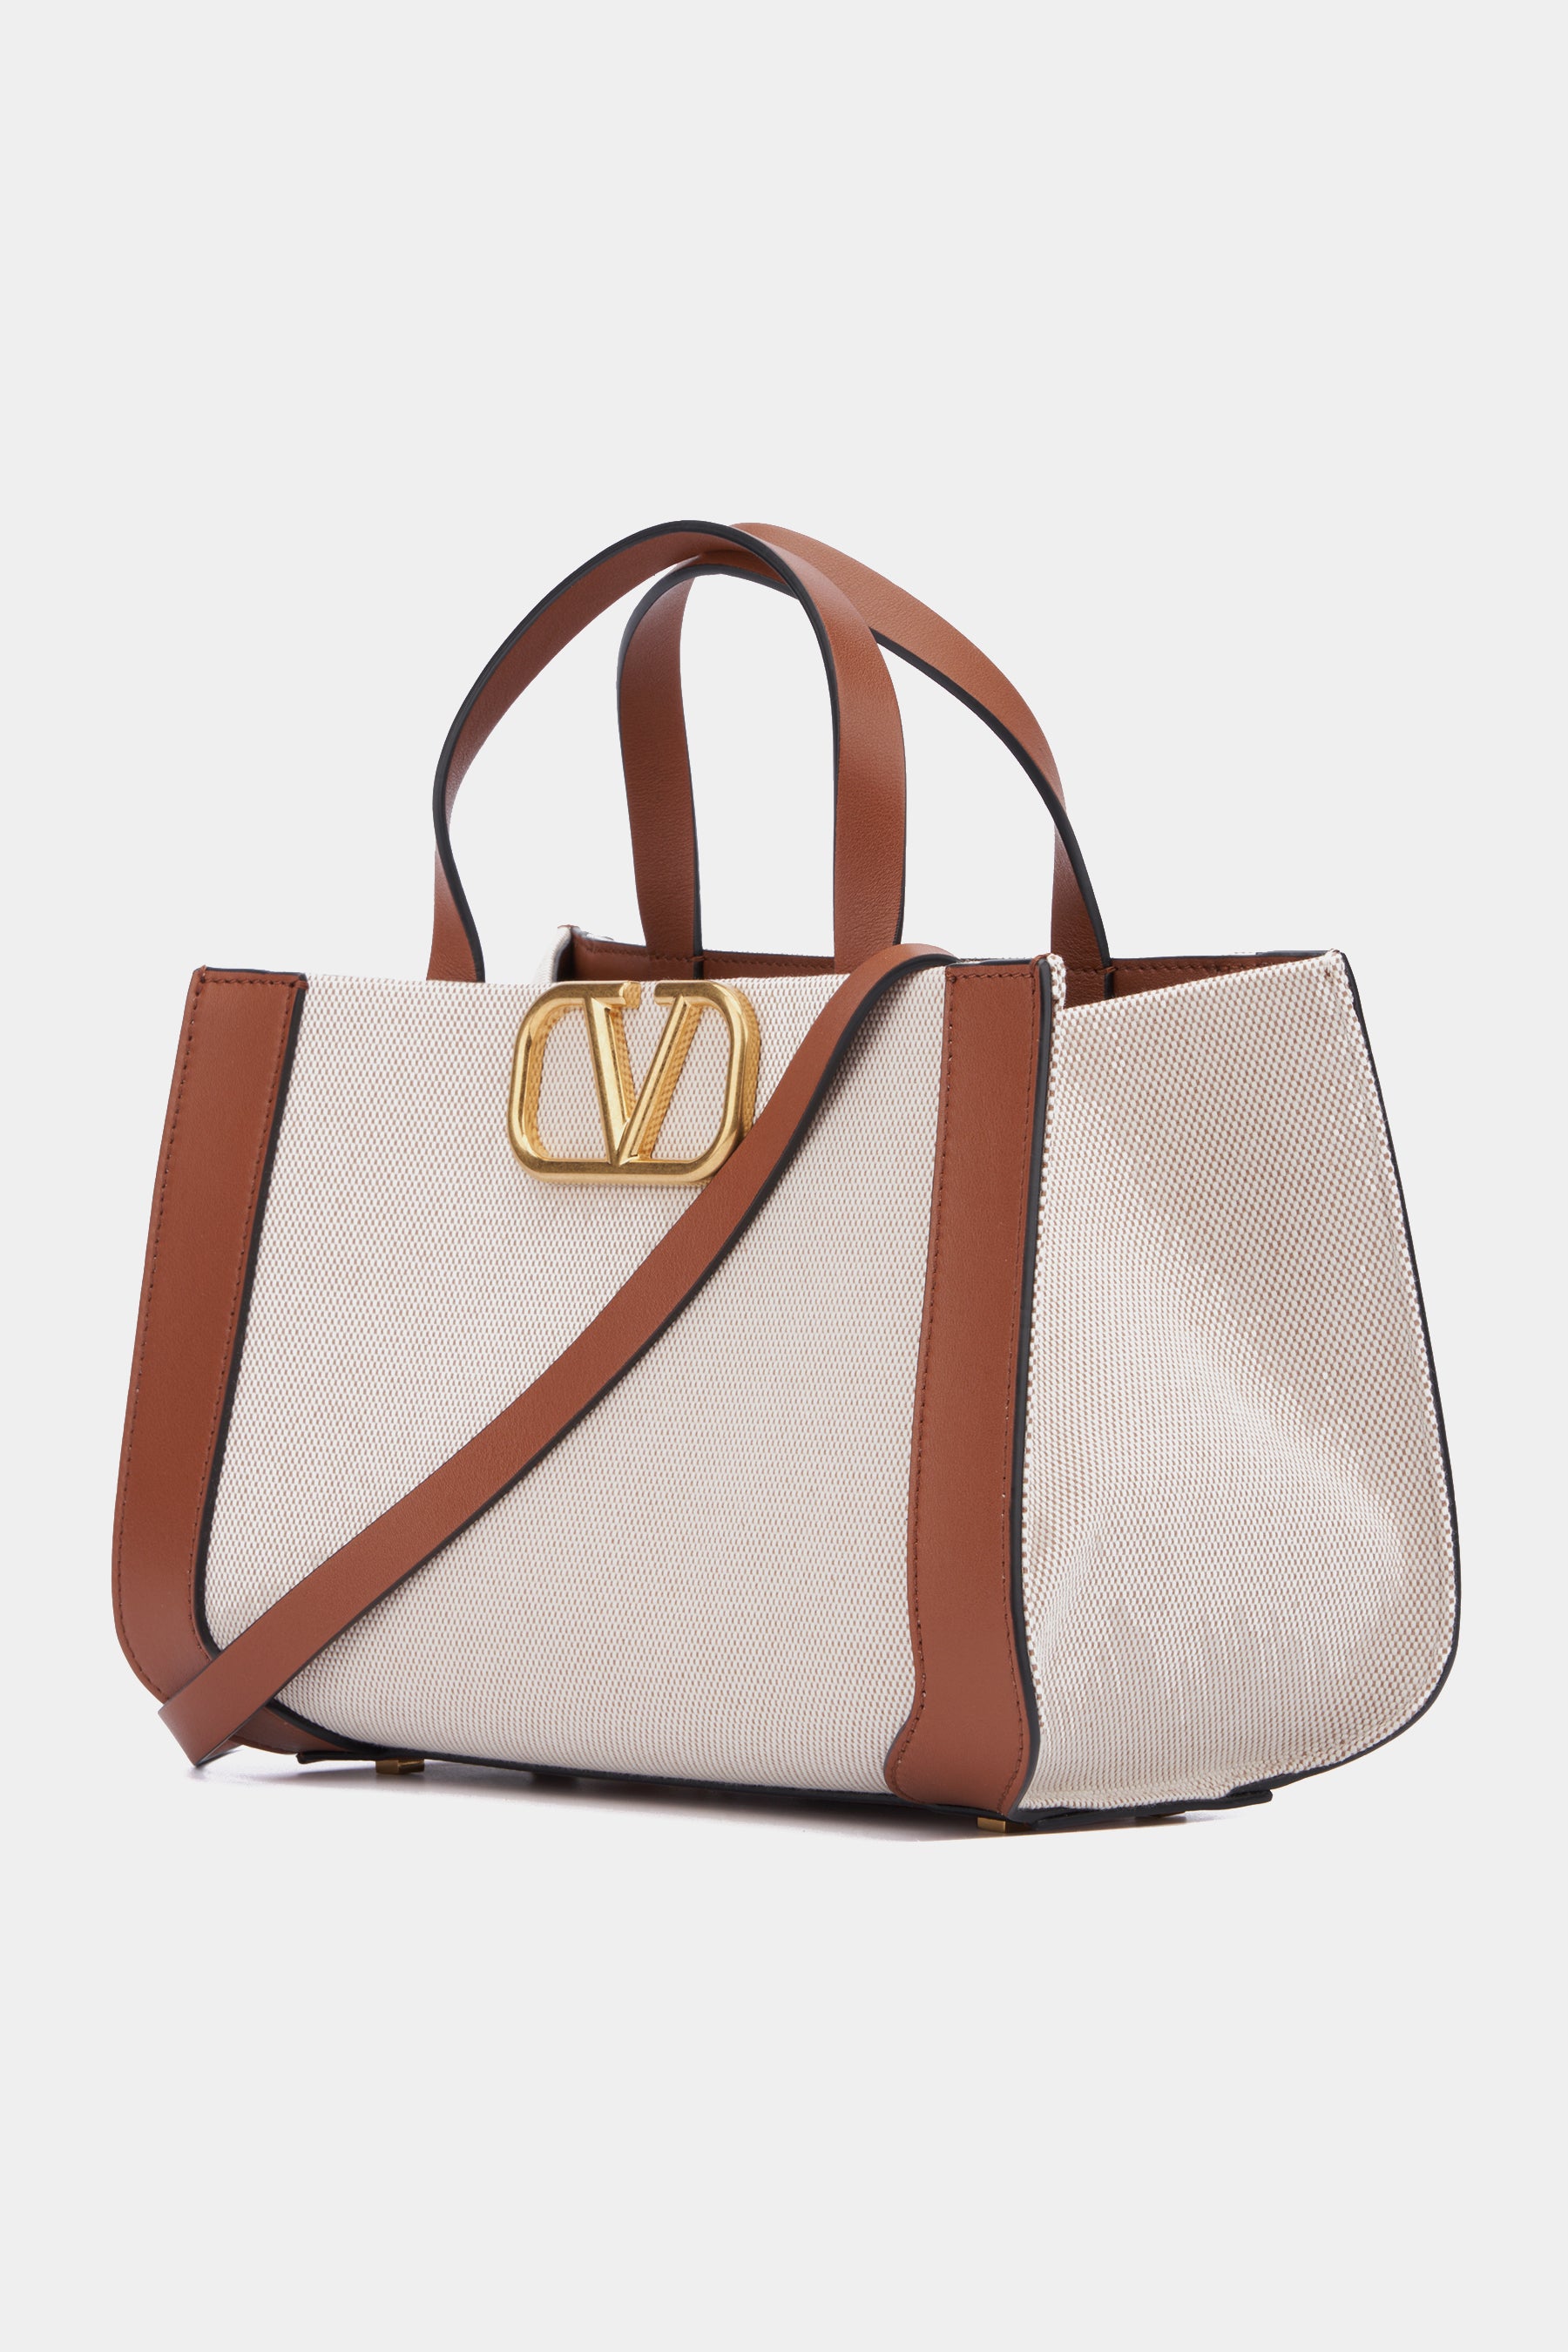 Totes bags Valentino Garavani - VLTN canvas and leather tote bag